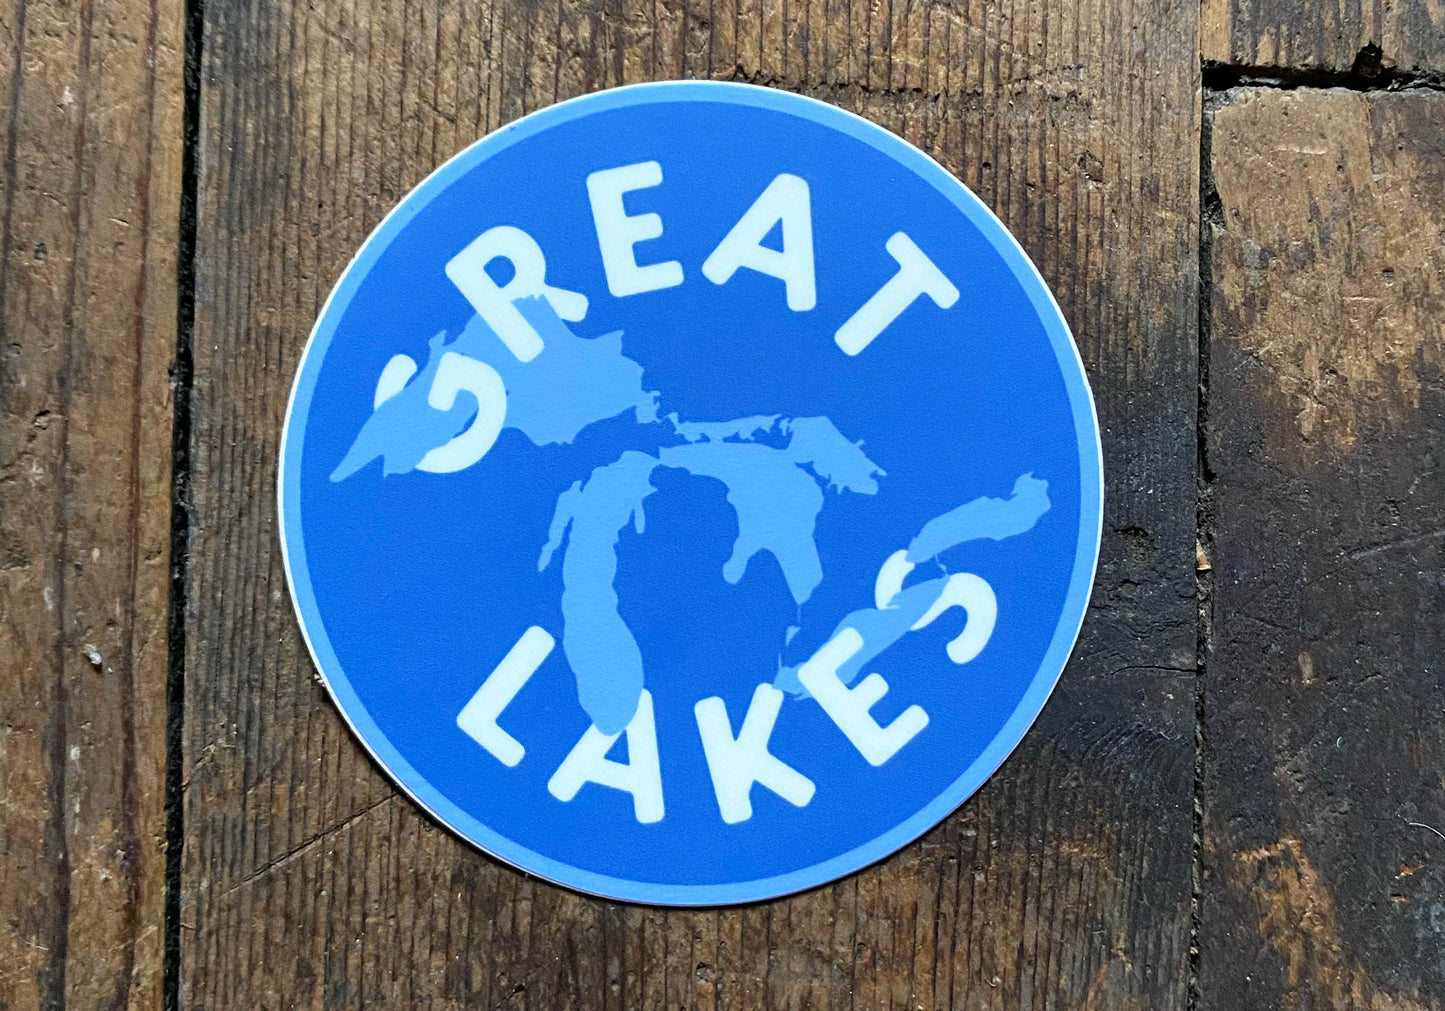 Great Lakes 3" Round Sticker - Weather Resistant Vinyl